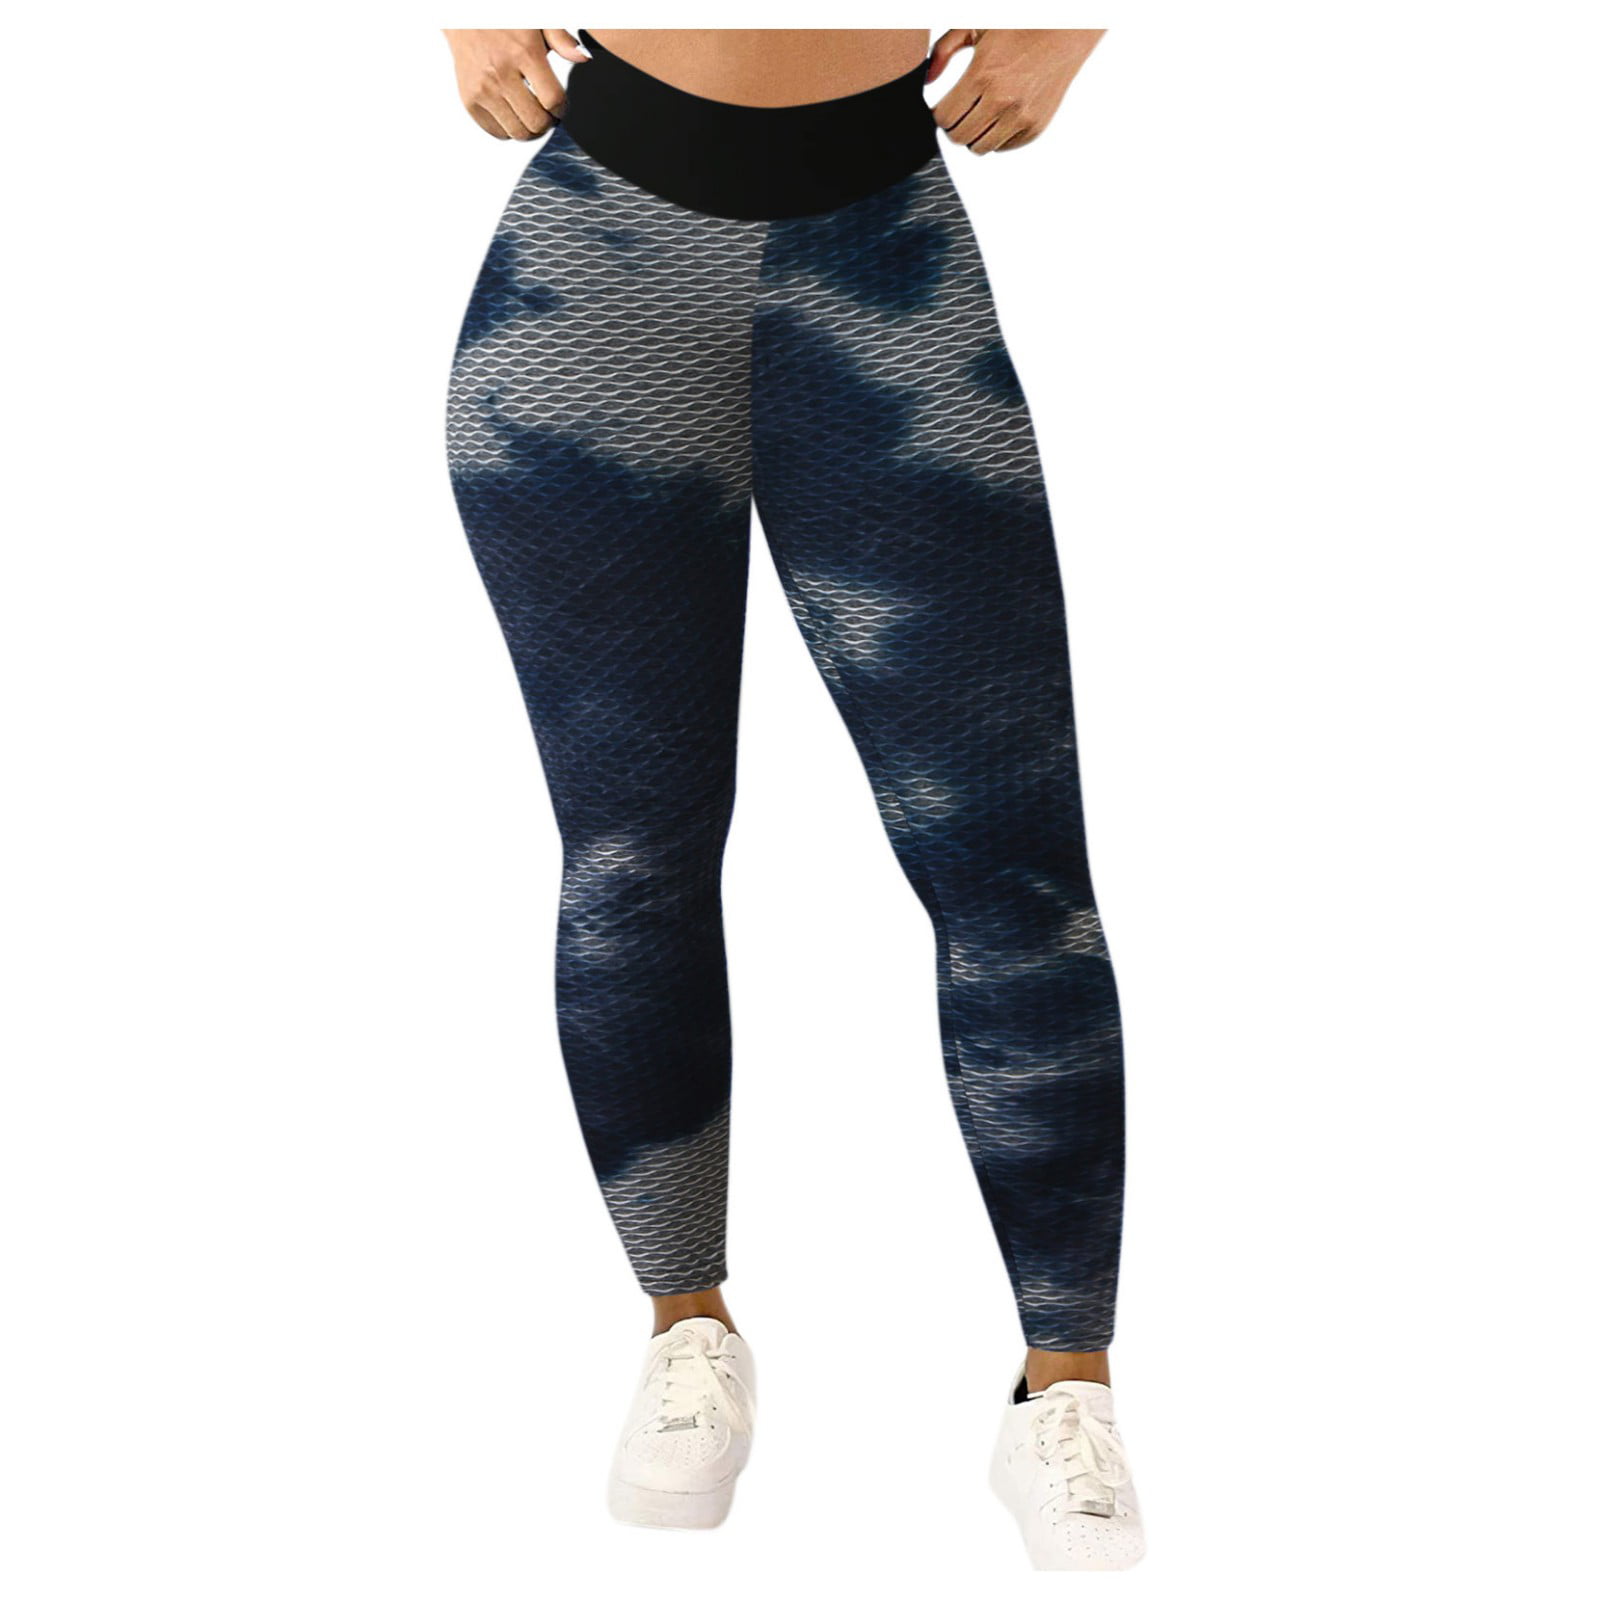 adviicd Yoga Pants For Women Dressy Yoga pants Cotton Sports pants